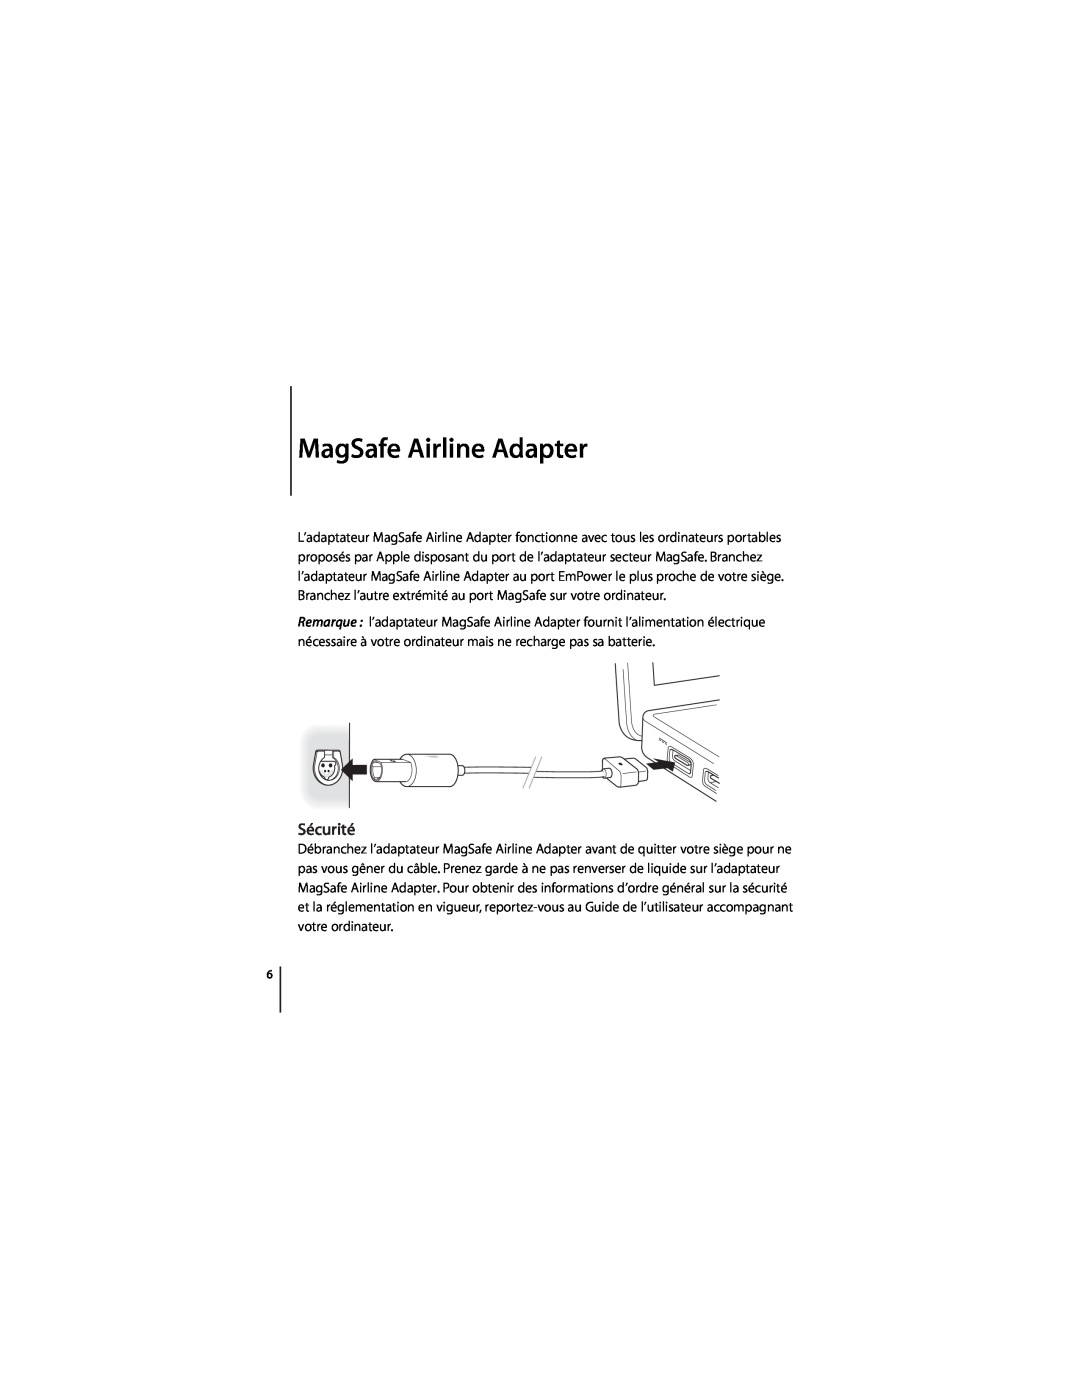 Apple manual MagSafe Airline Adapter, Sécurité 